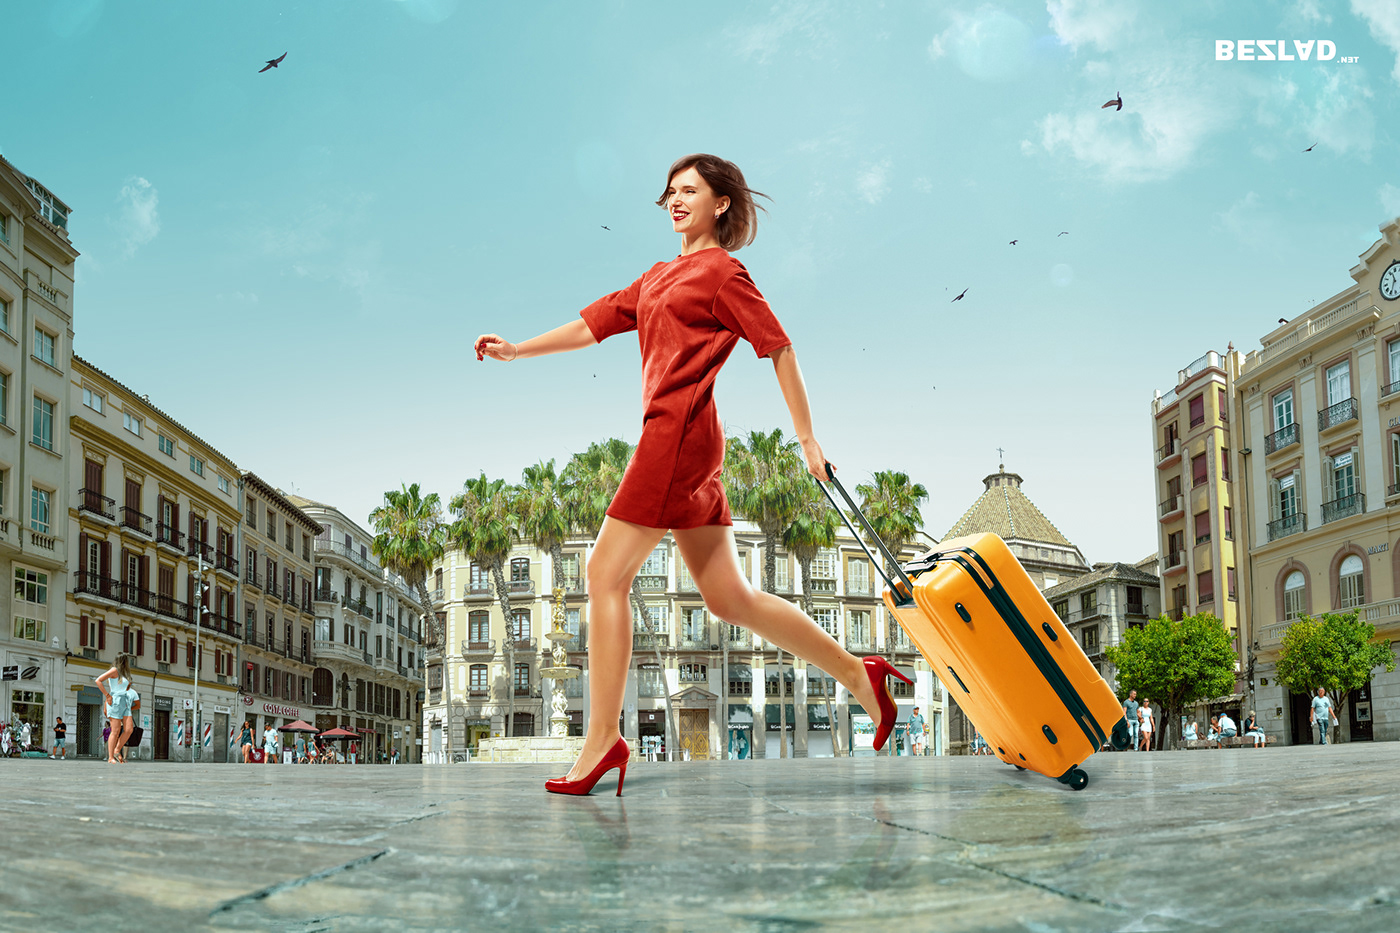 malaga Travel luggage suitcase woman turquoise Advertising  panorama Street emotions